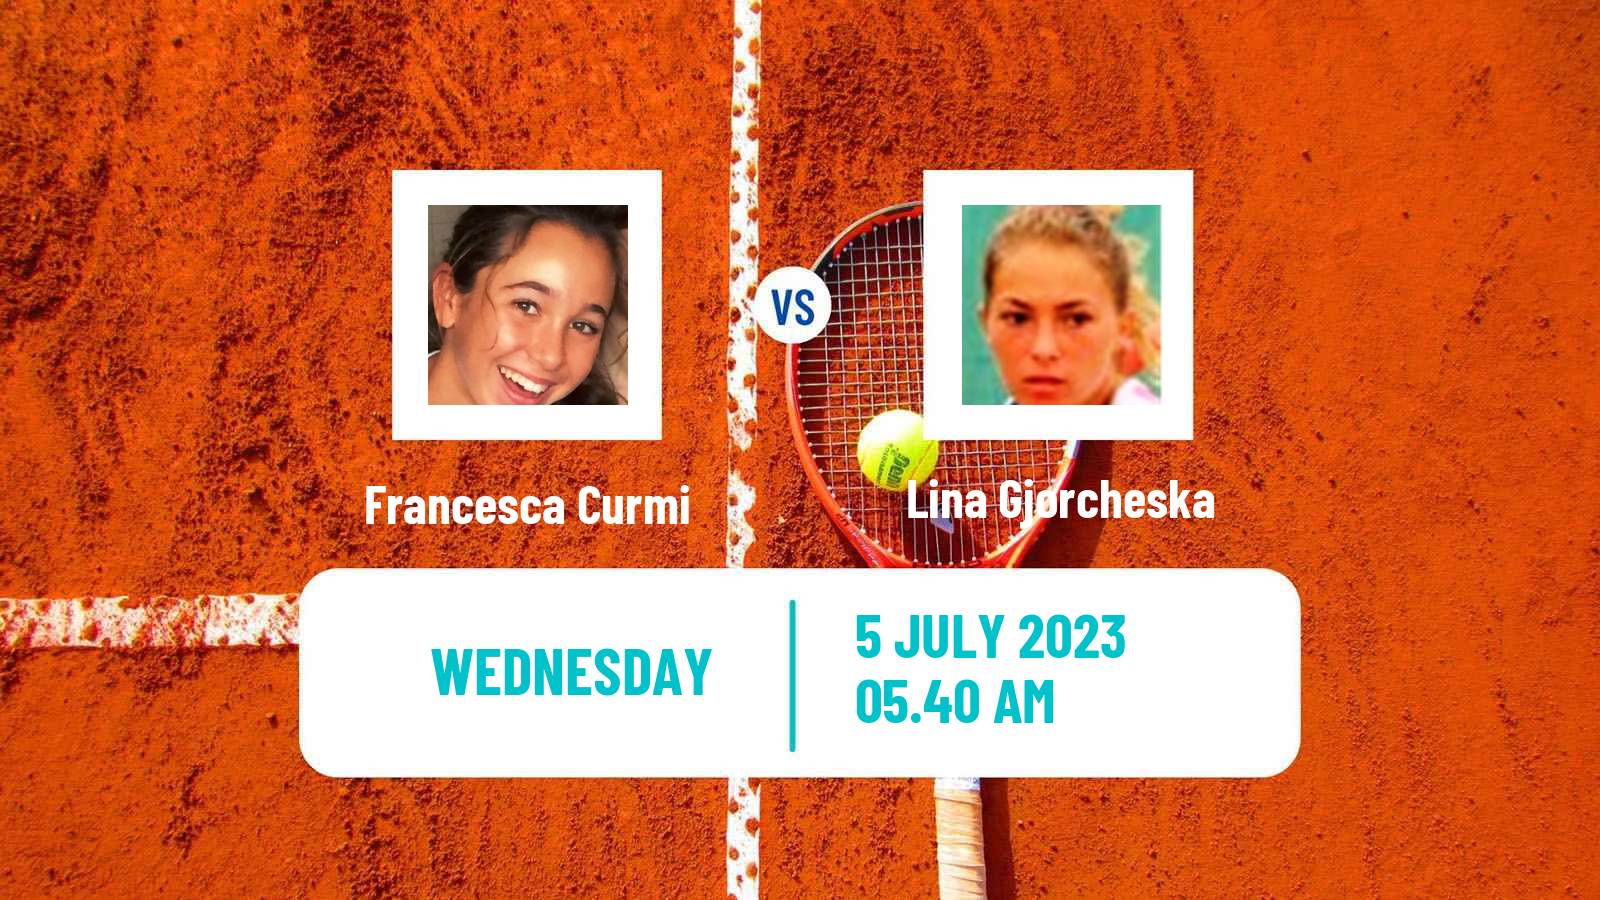 Tennis ITF W60 Liepaja Women Francesca Curmi - Lina Gjorcheska